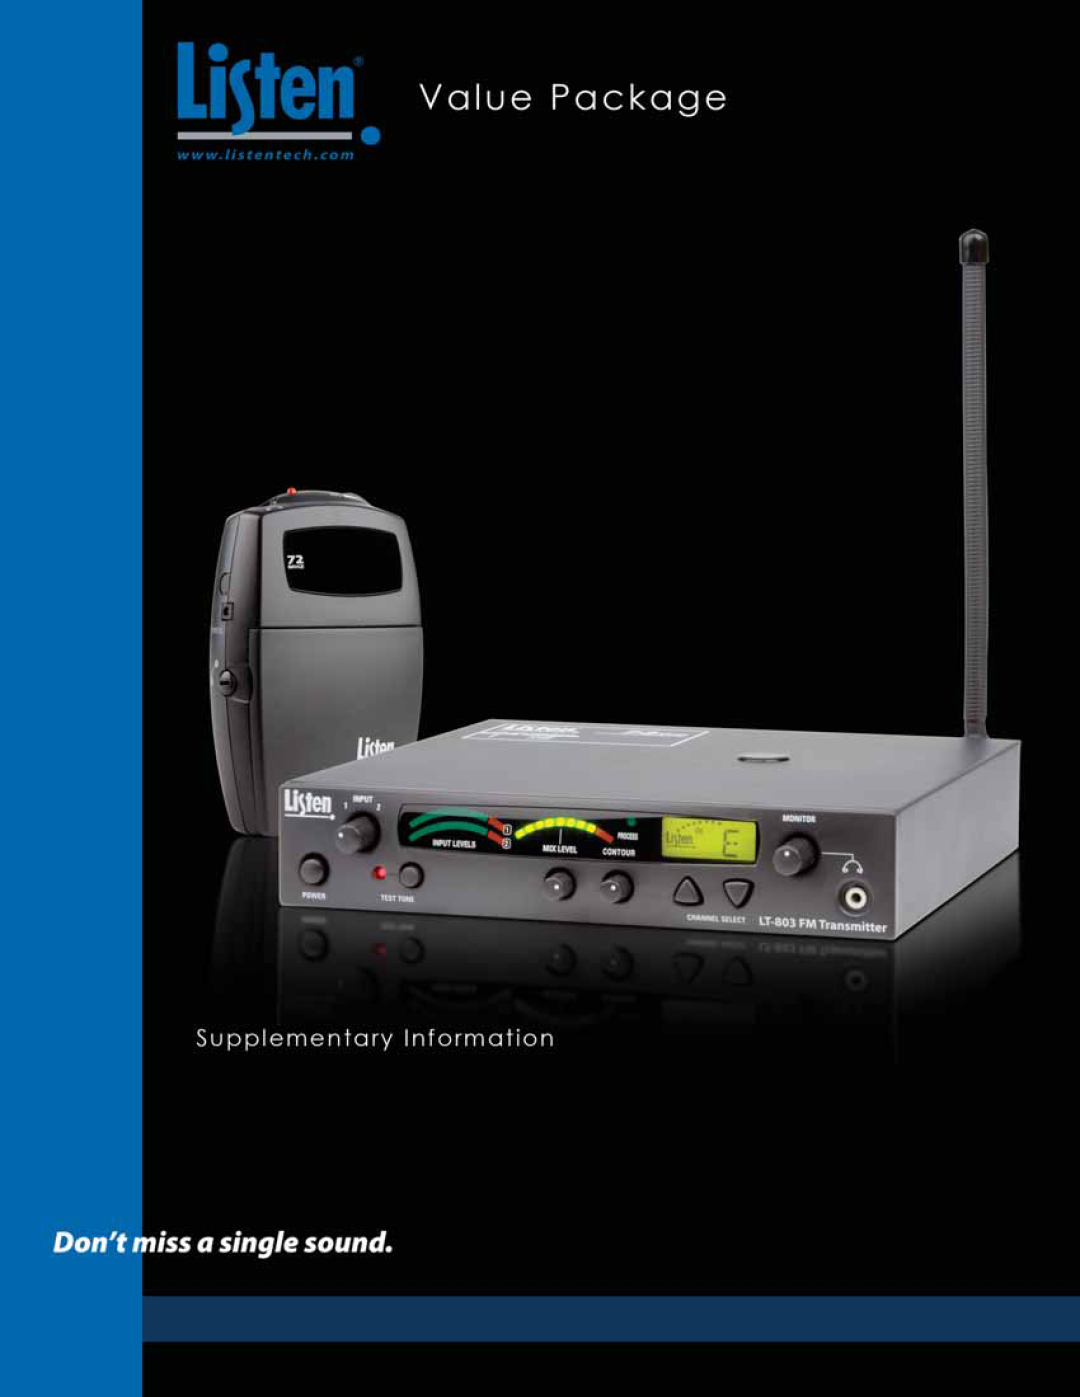 Listen Technologies LT-803-072, LP-3CV-072, LR-200-072, LA-161, LA-123 90 manual 